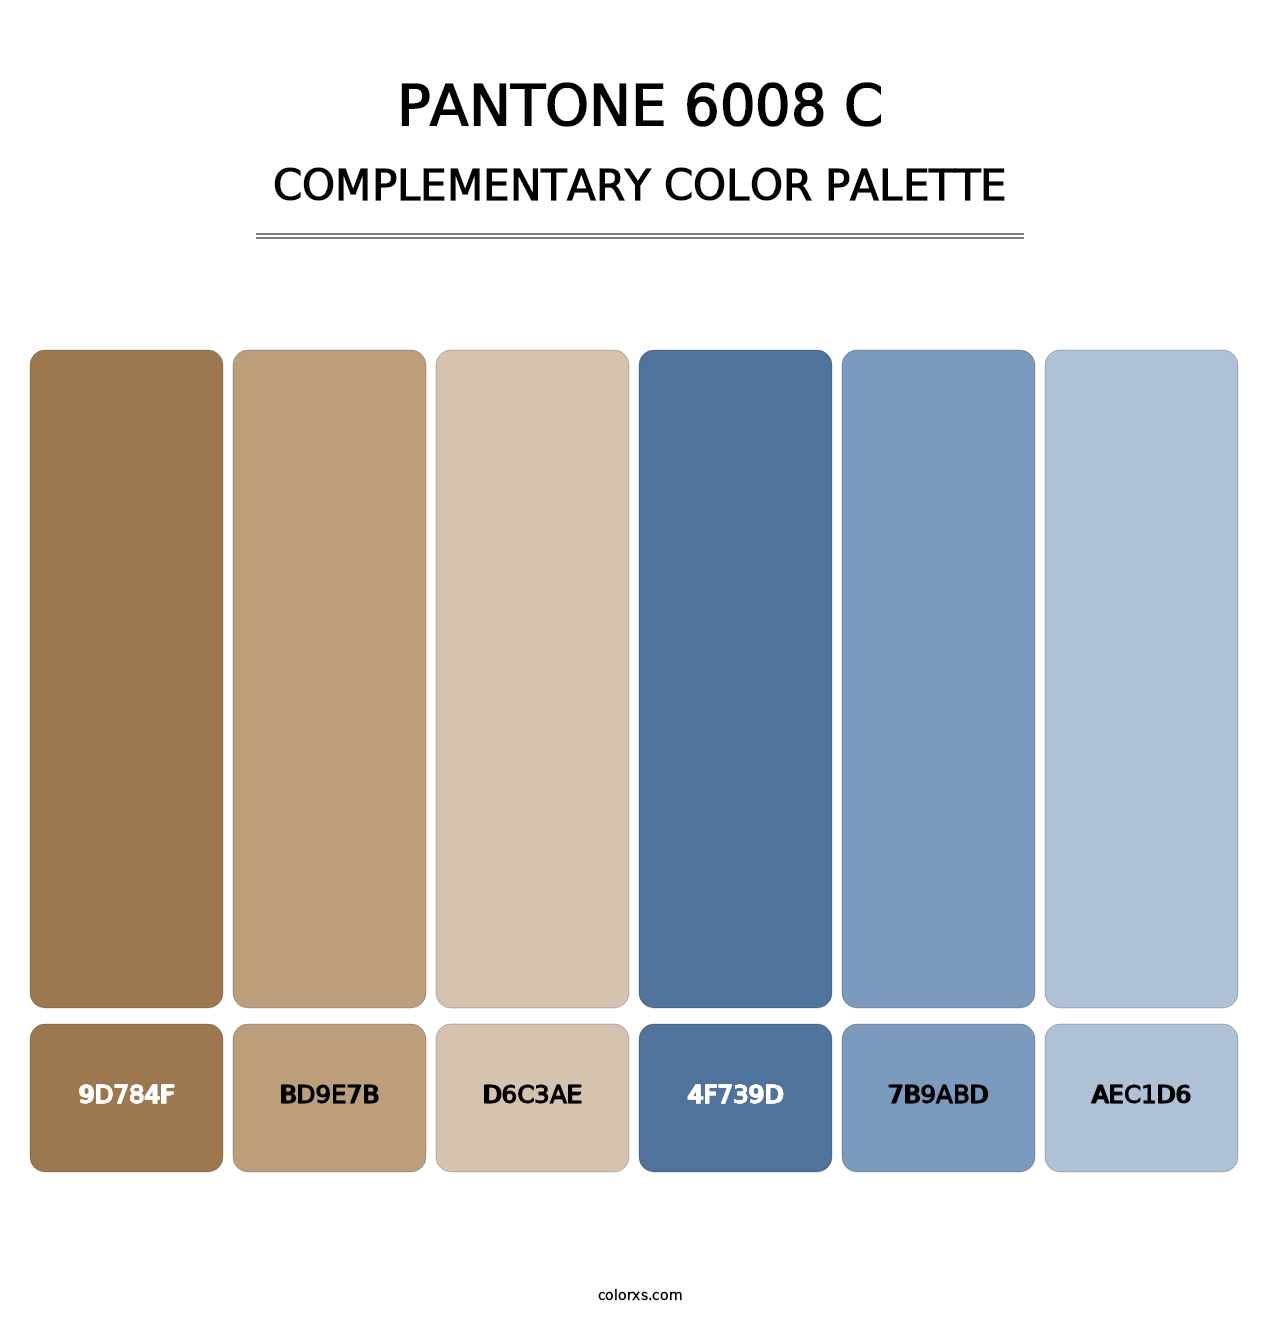 PANTONE 6008 C - Complementary Color Palette